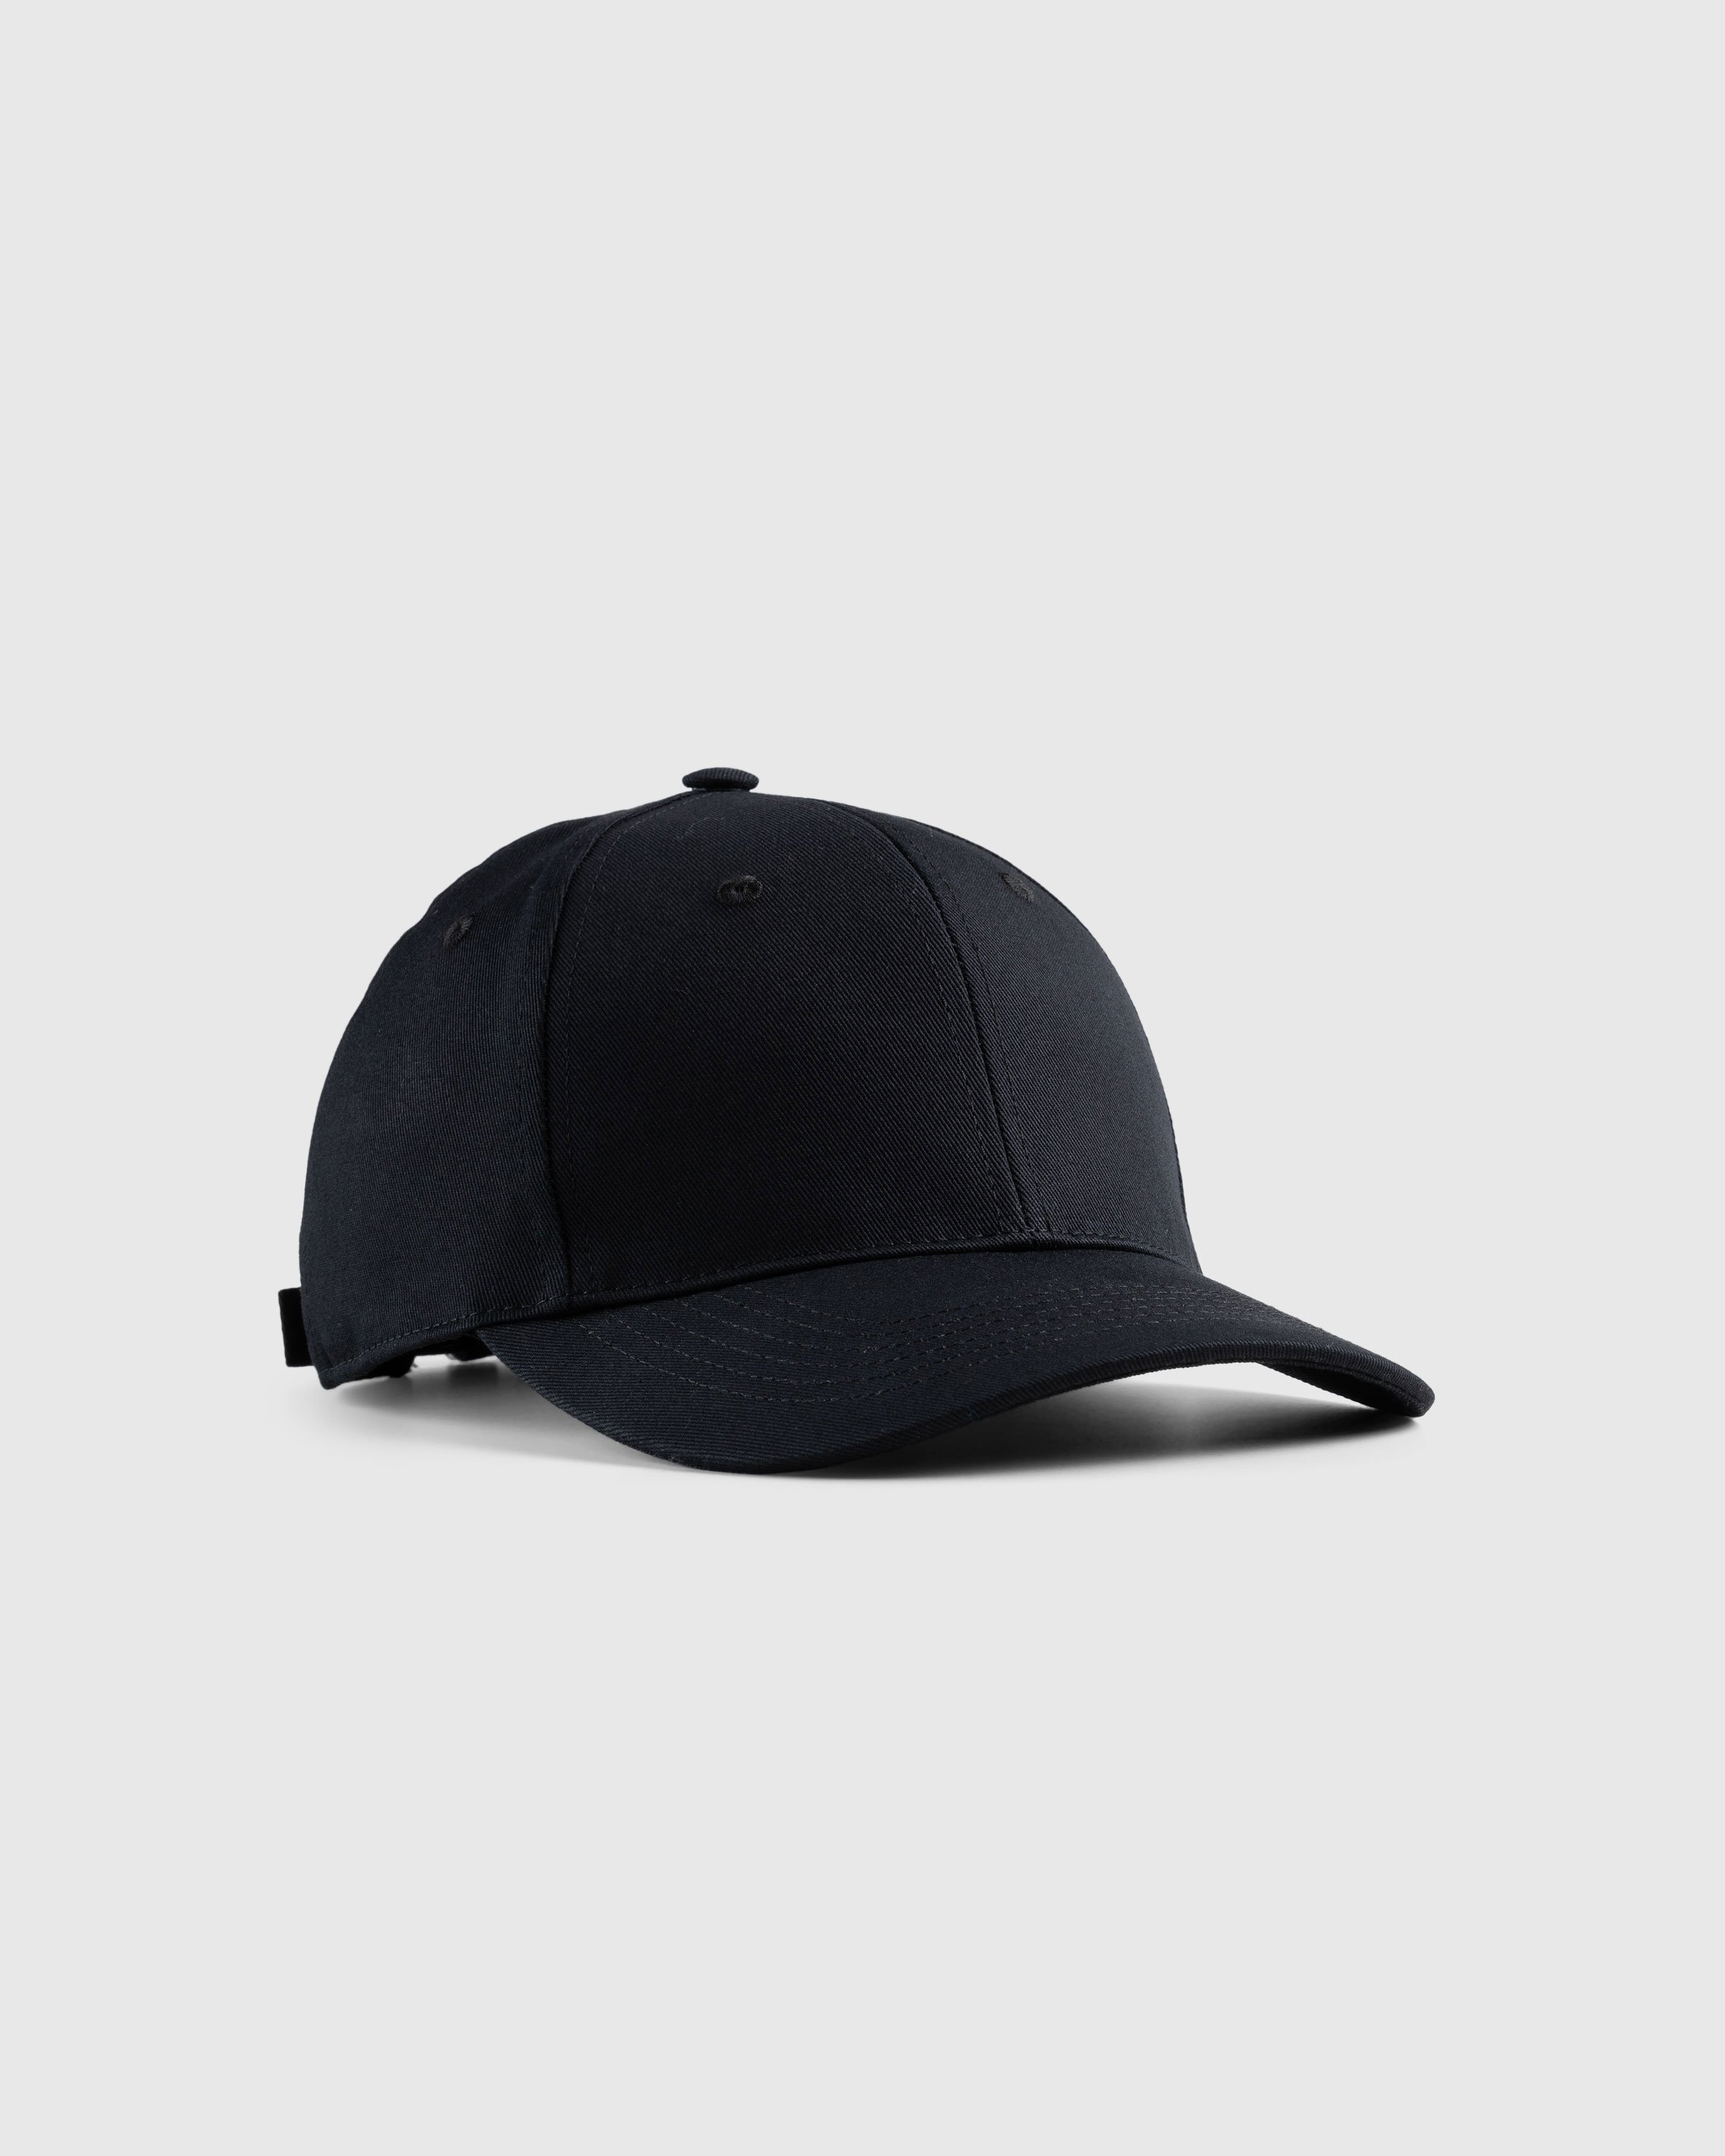 Meta Campania Collective - Spike Baseball Hat Black - Accessories - Black - Image 1